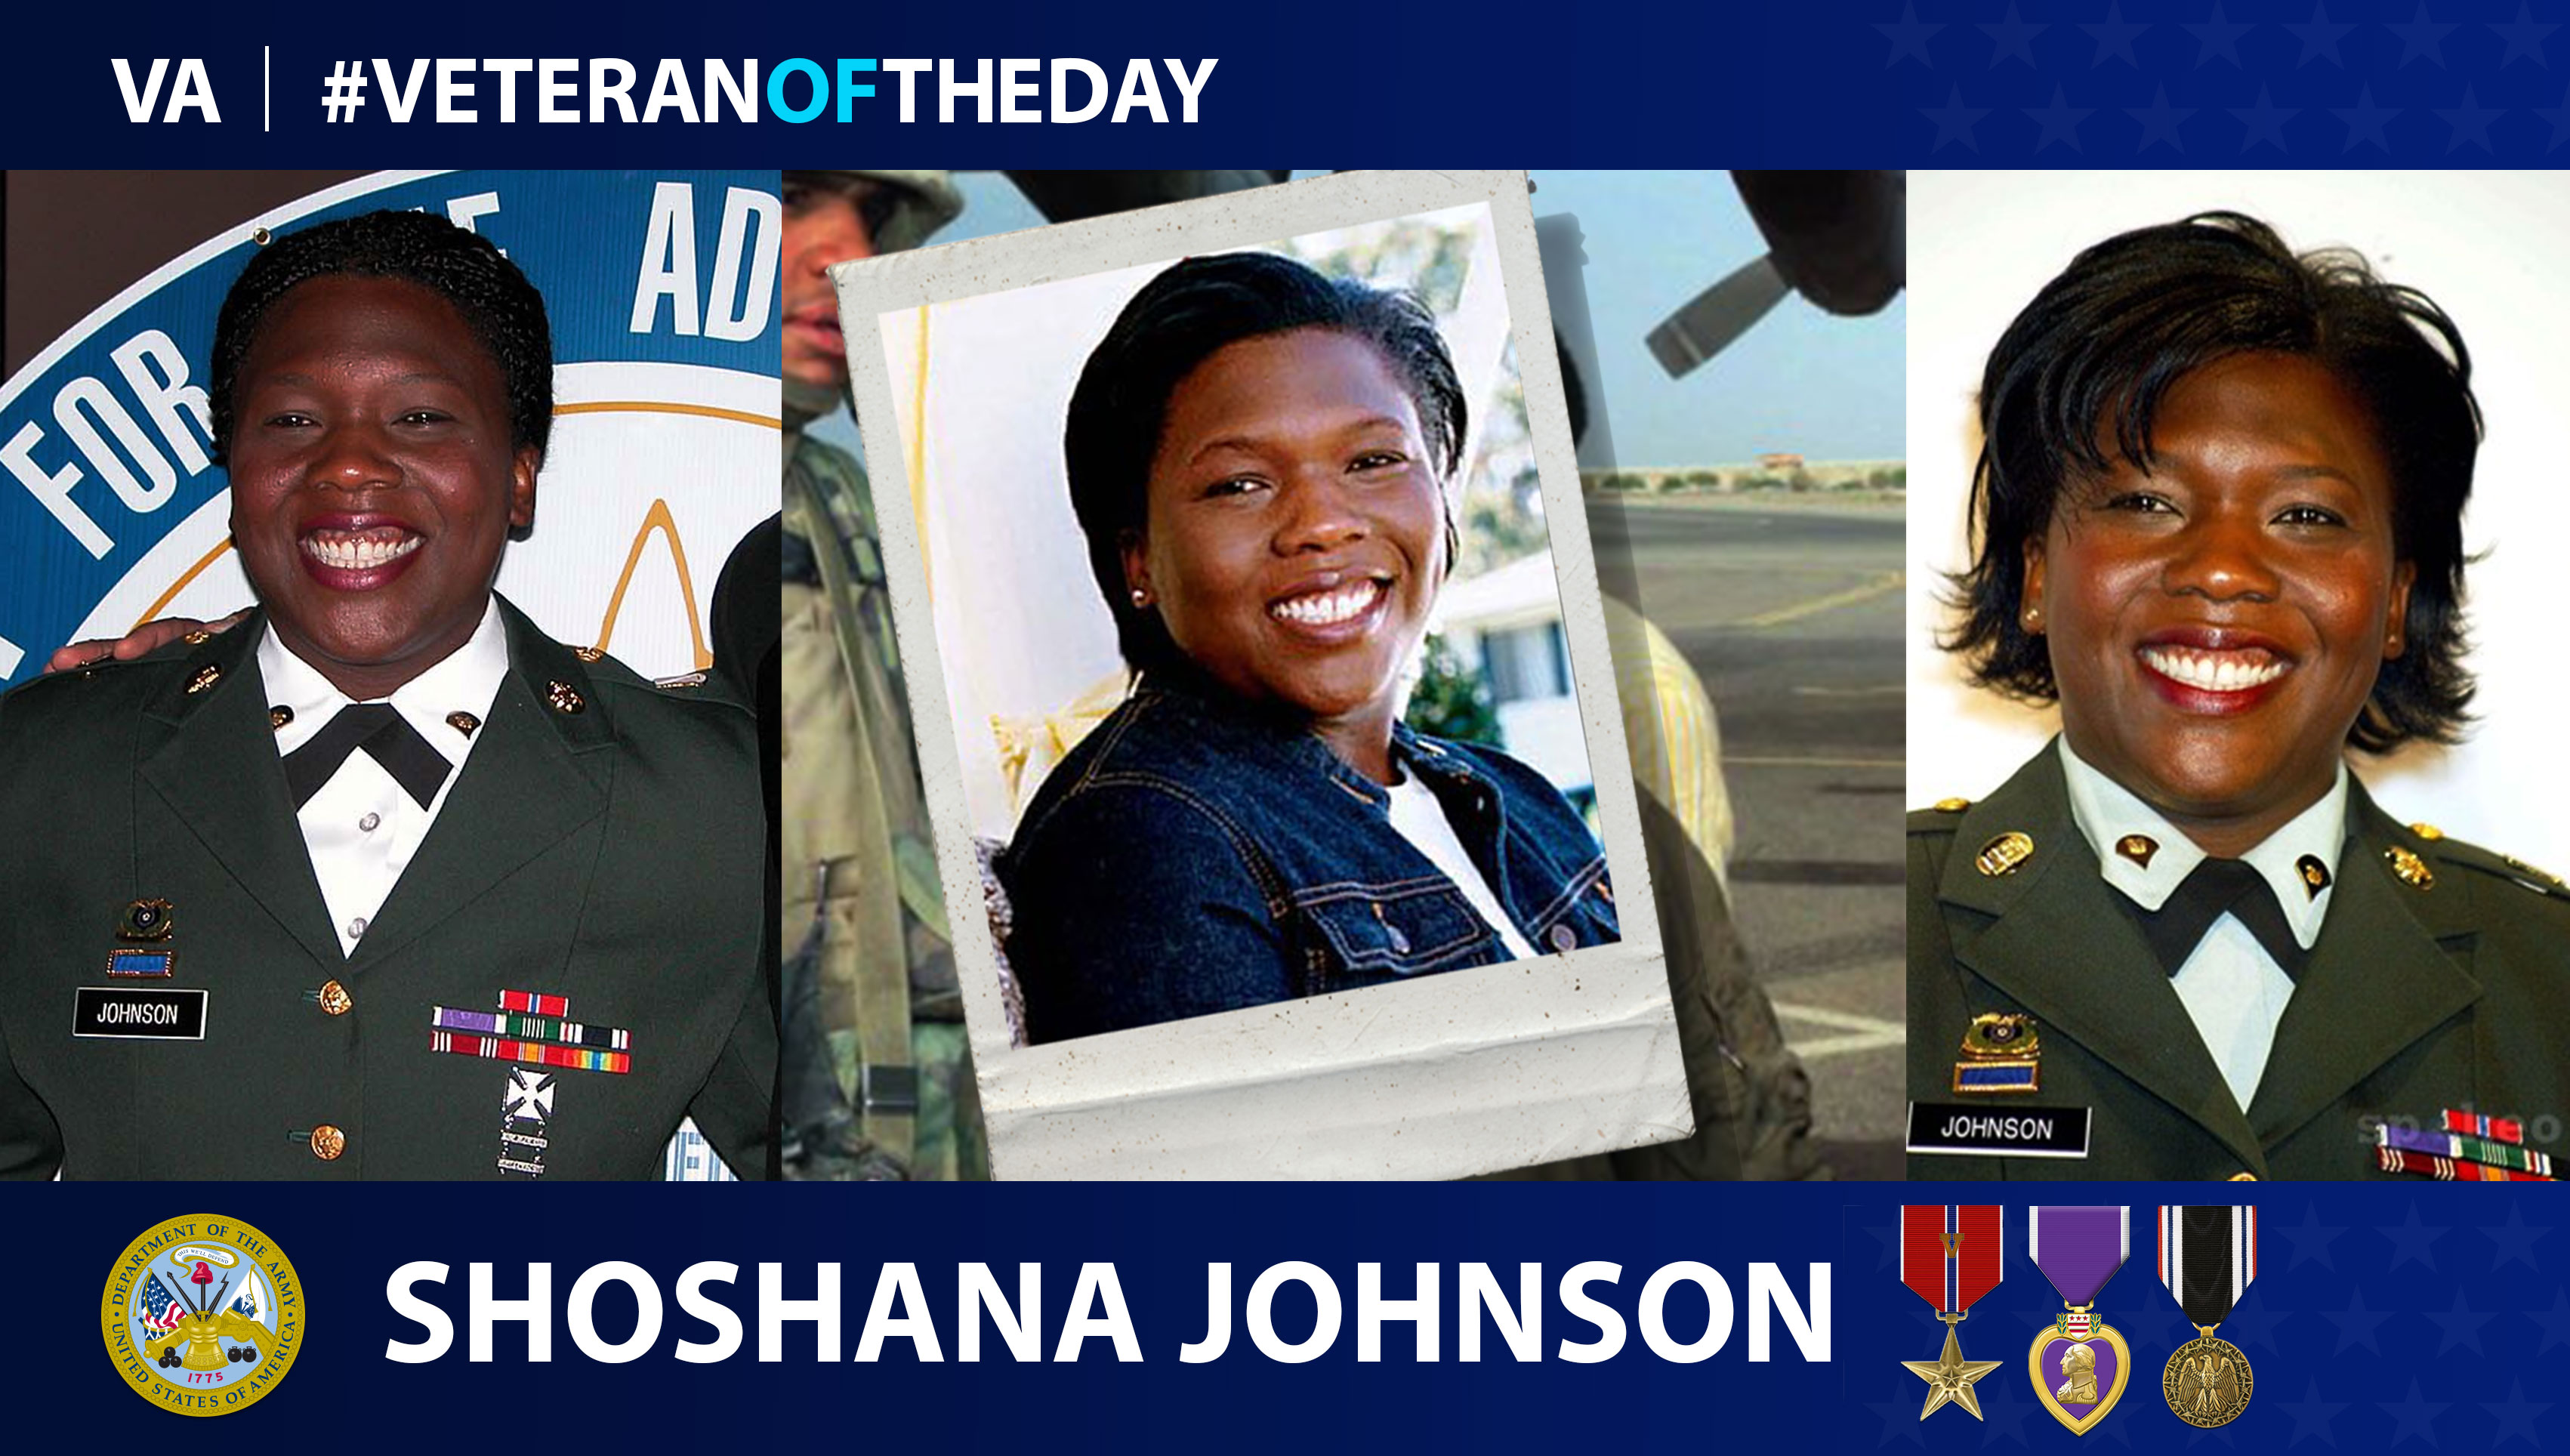 Veteran of the Day graphic for Shoshana Johnson